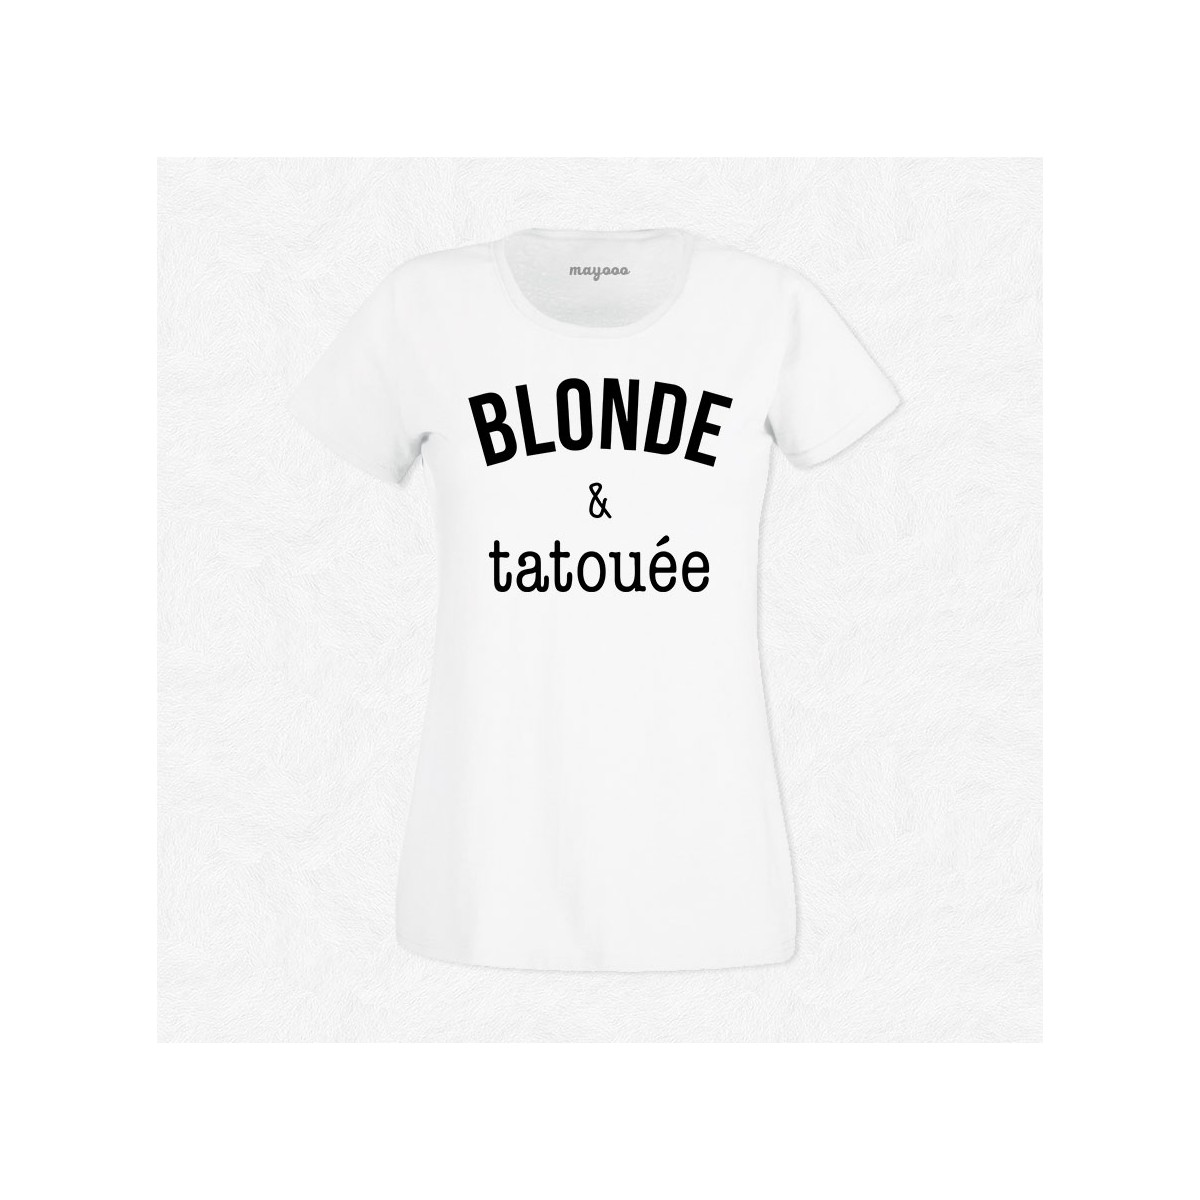 T-shirt Blonde & tatouée